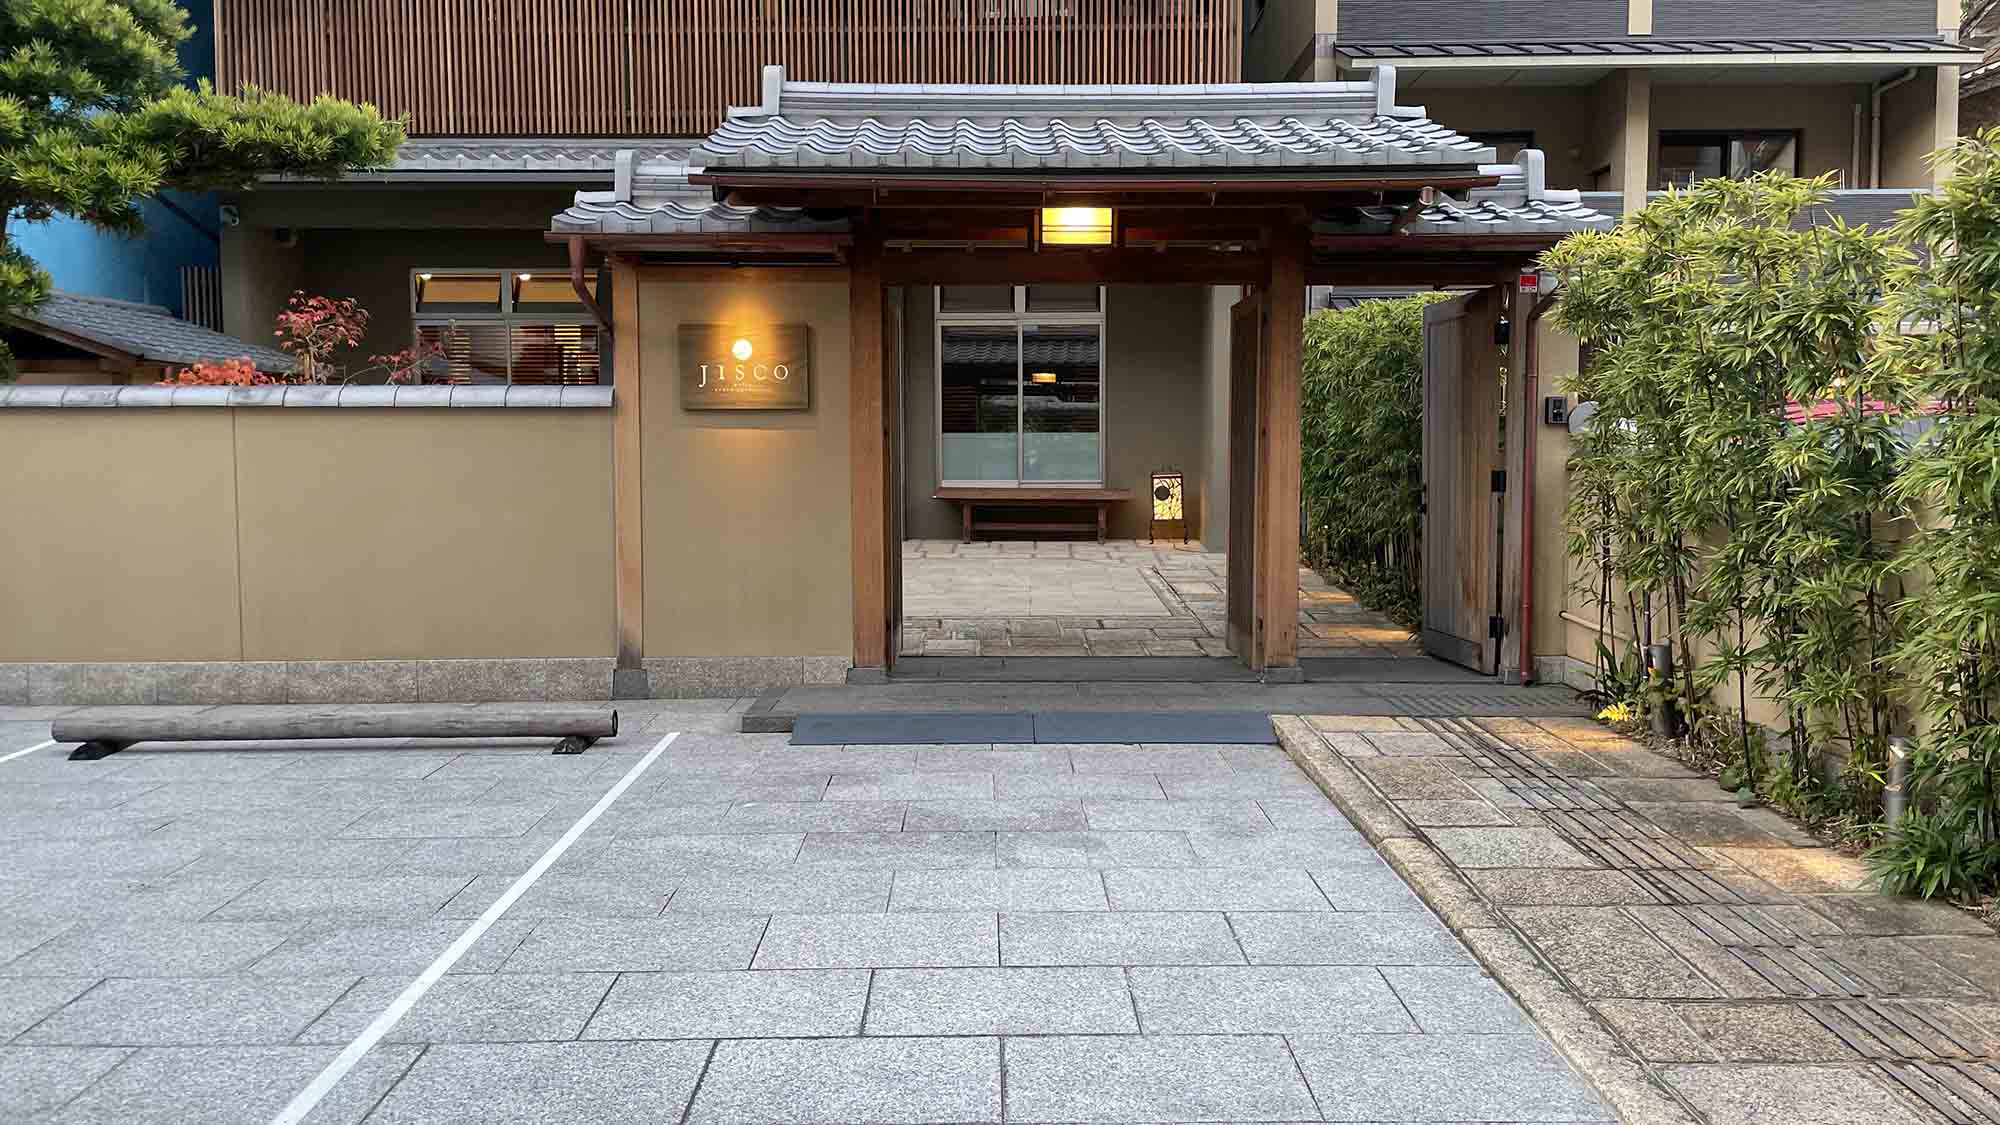 Jisco Hotel Kyoto Goshonishi